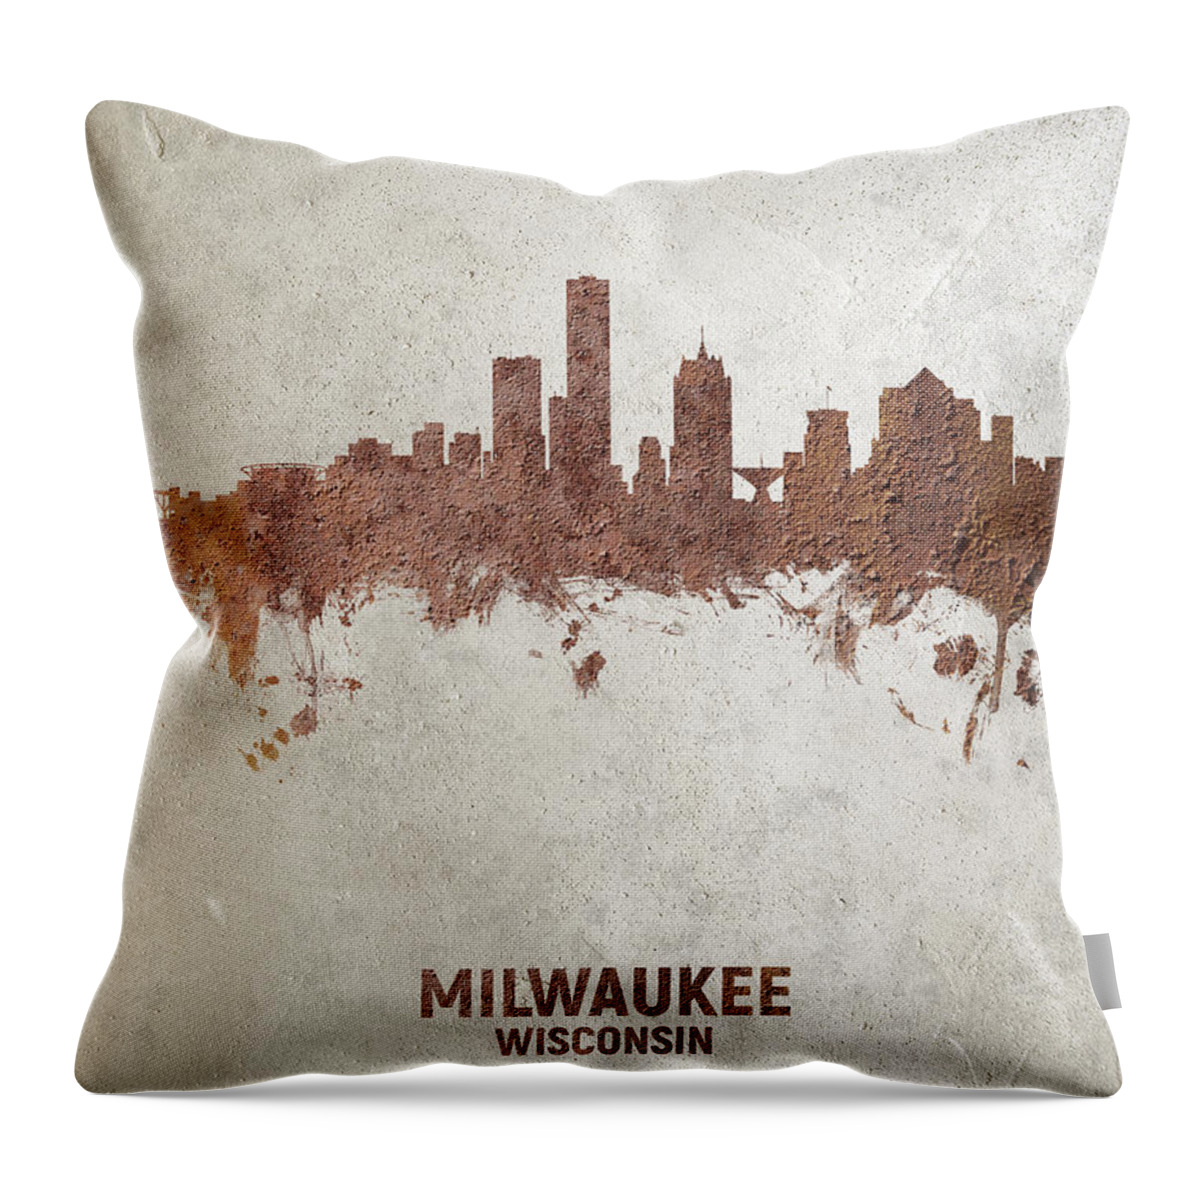 Milwaukee Throw Pillow featuring the digital art Milwaukee Wisconsin Skyline #26 by Michael Tompsett